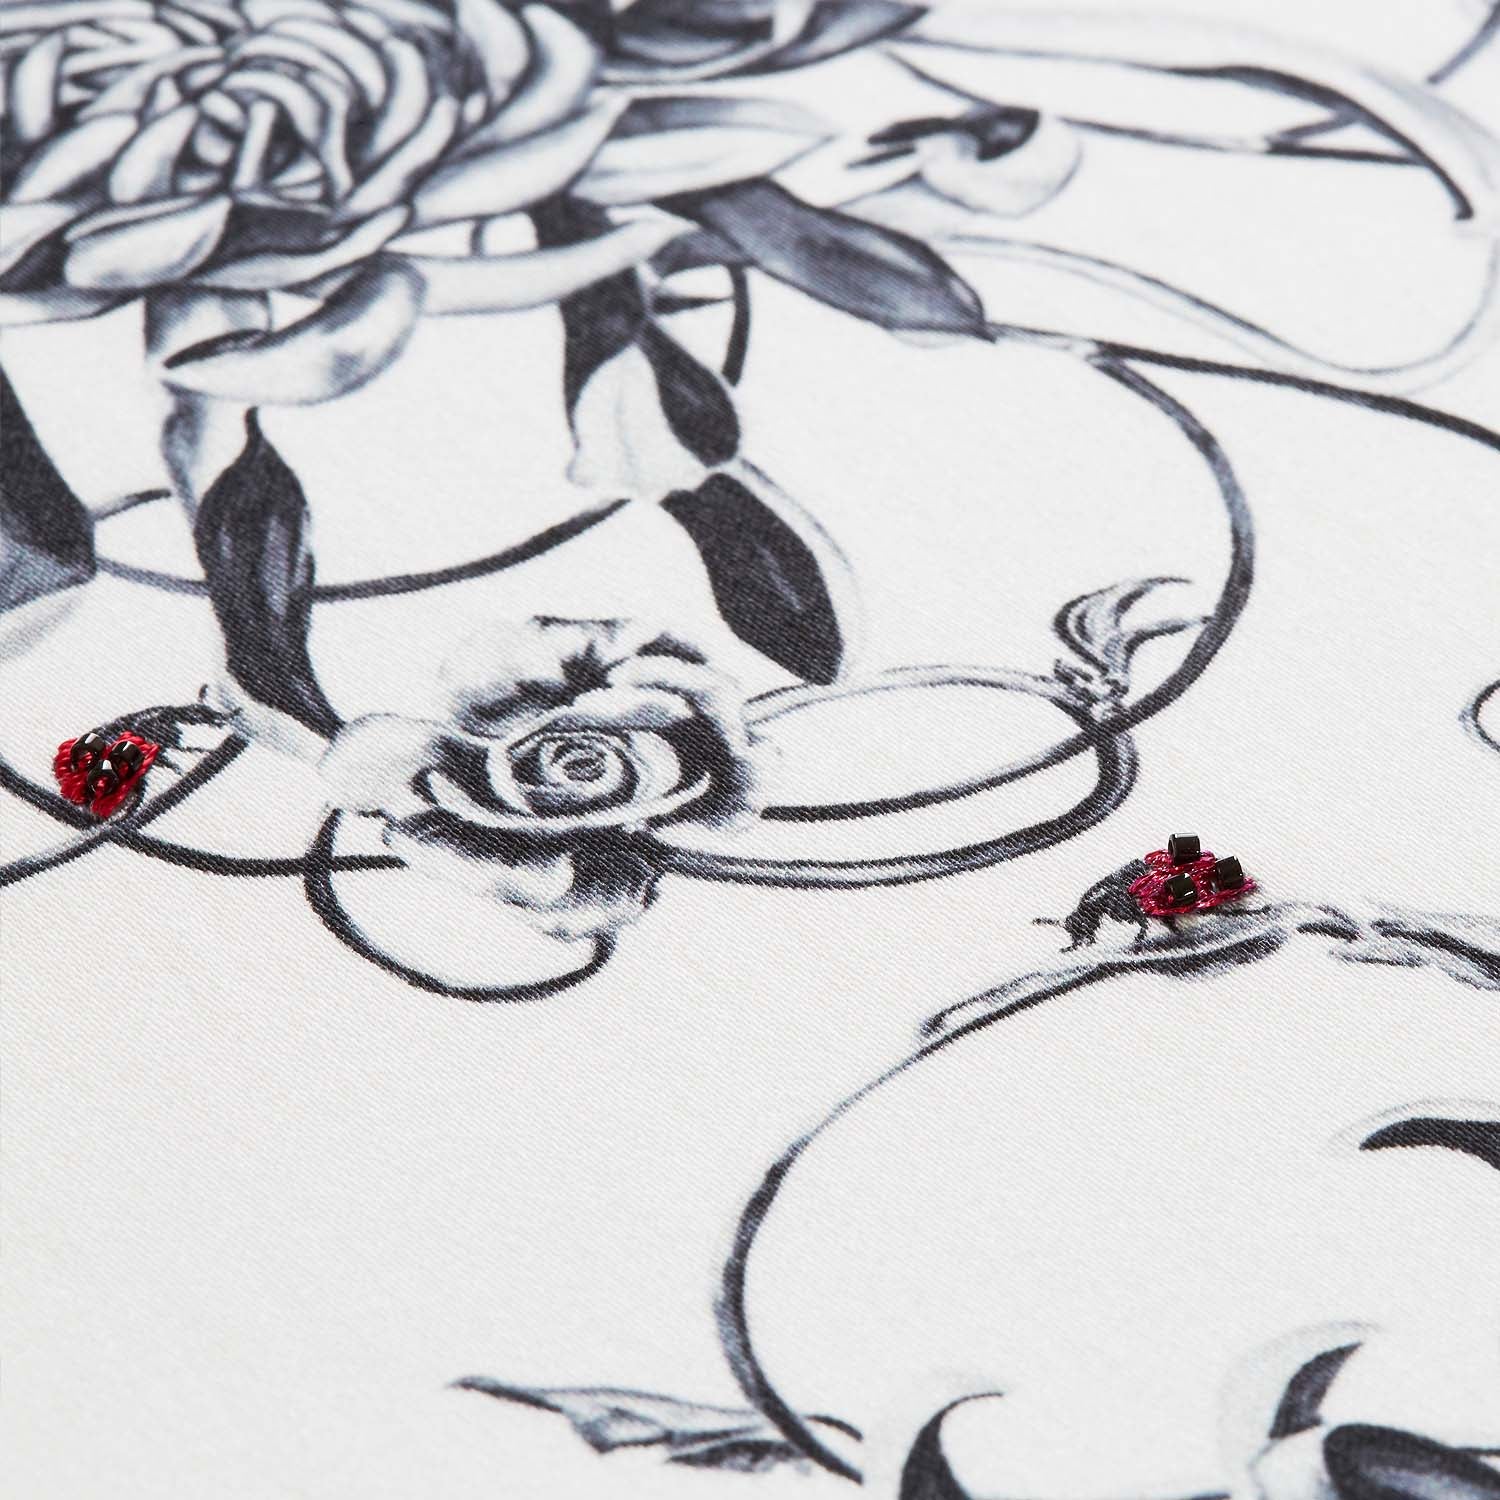 Entangle chrysanthemums hand embroidered artwork